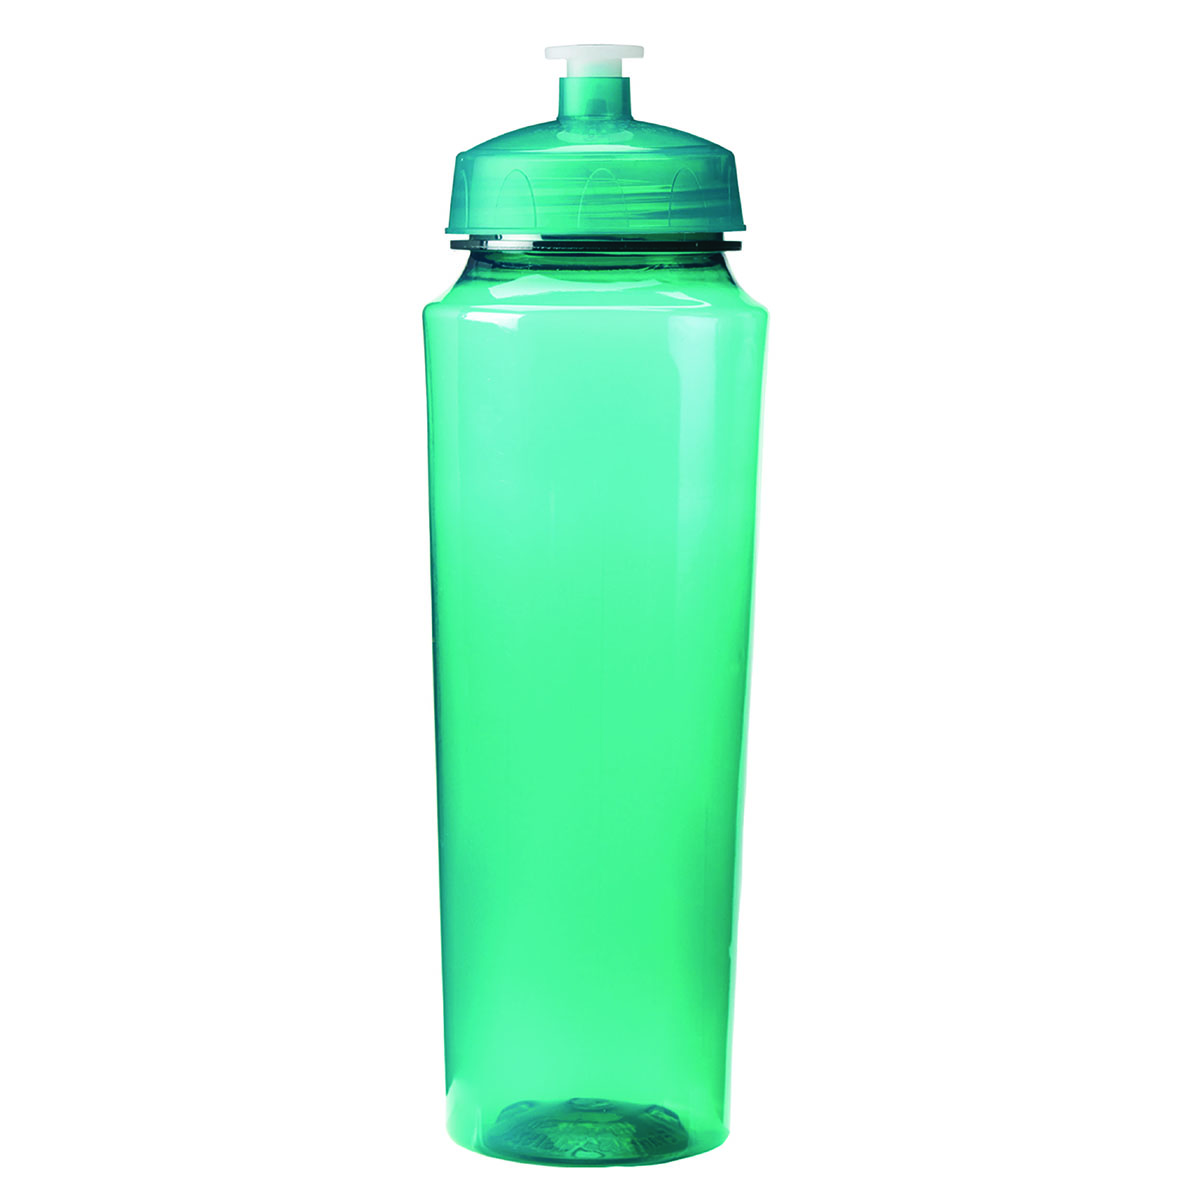 Translucent Aqua Blue PolySure Measure Bottle (24 oz)